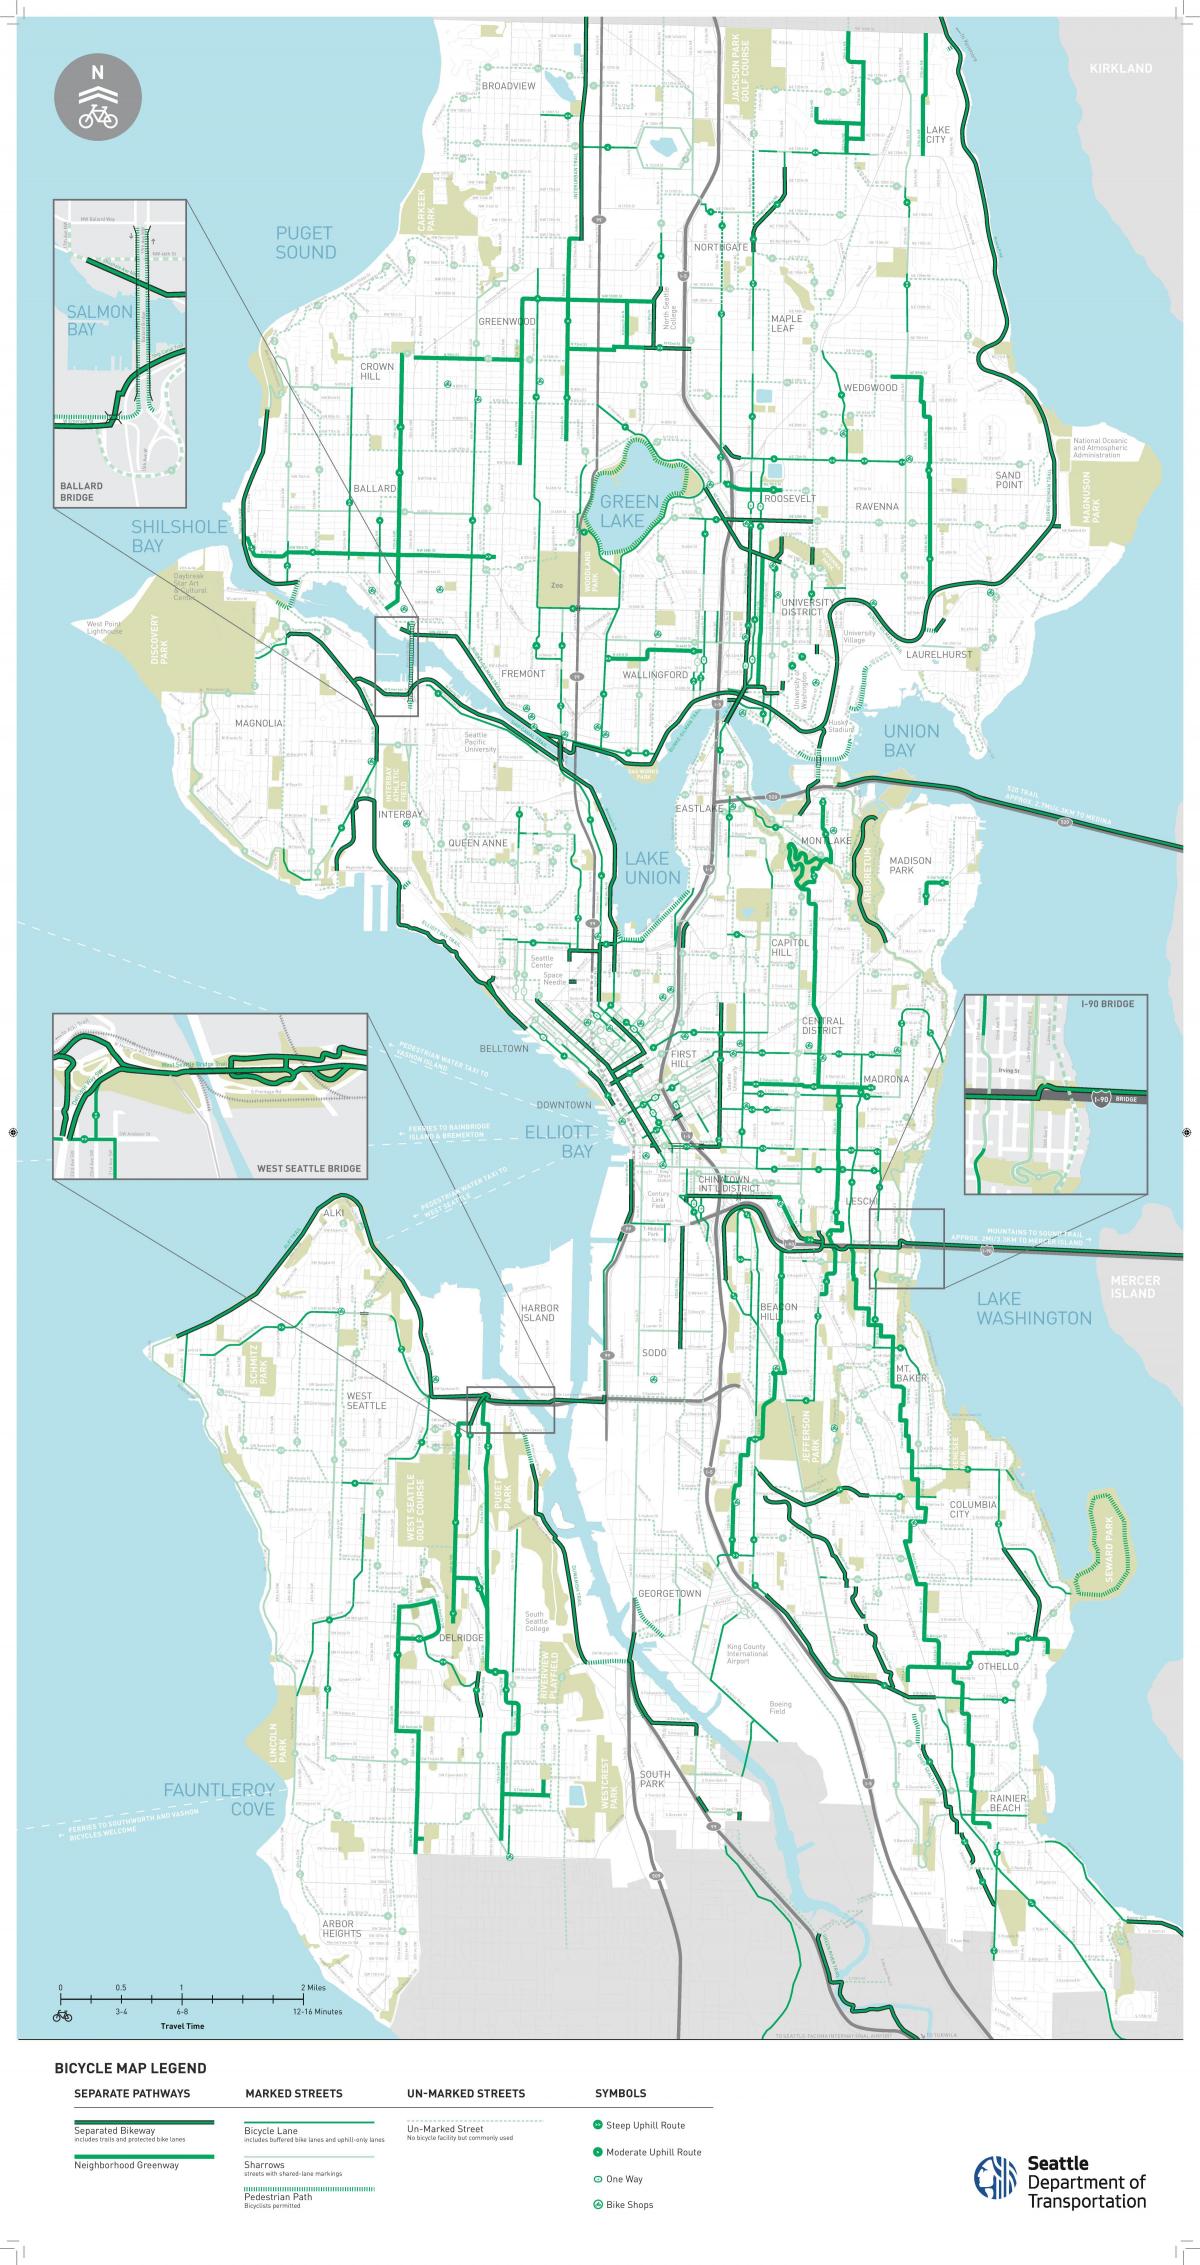 Seattle bike lane map